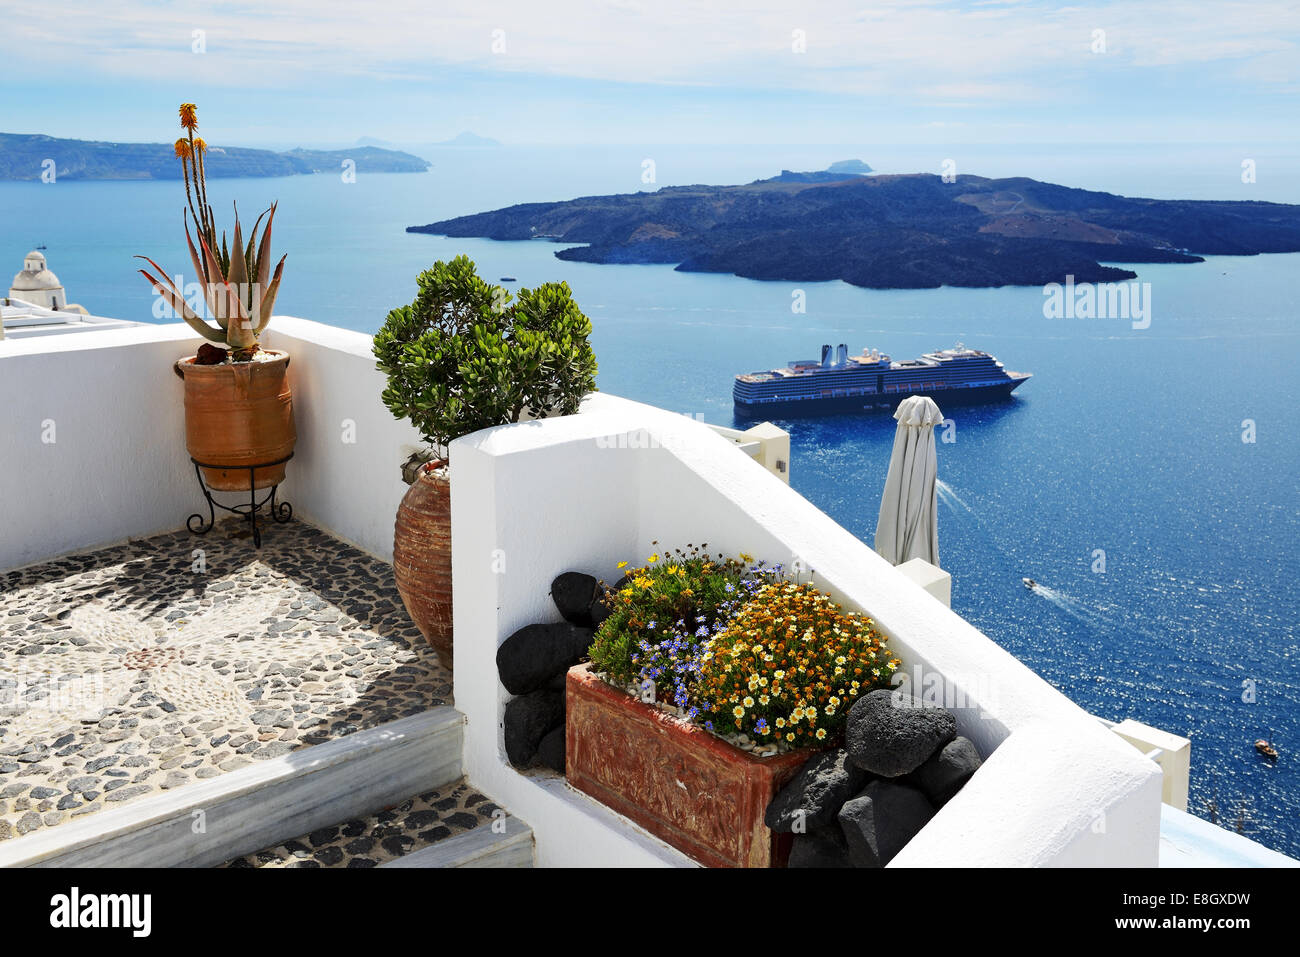 The house decoration and sea view, Santorini island, Greece Stock Photo